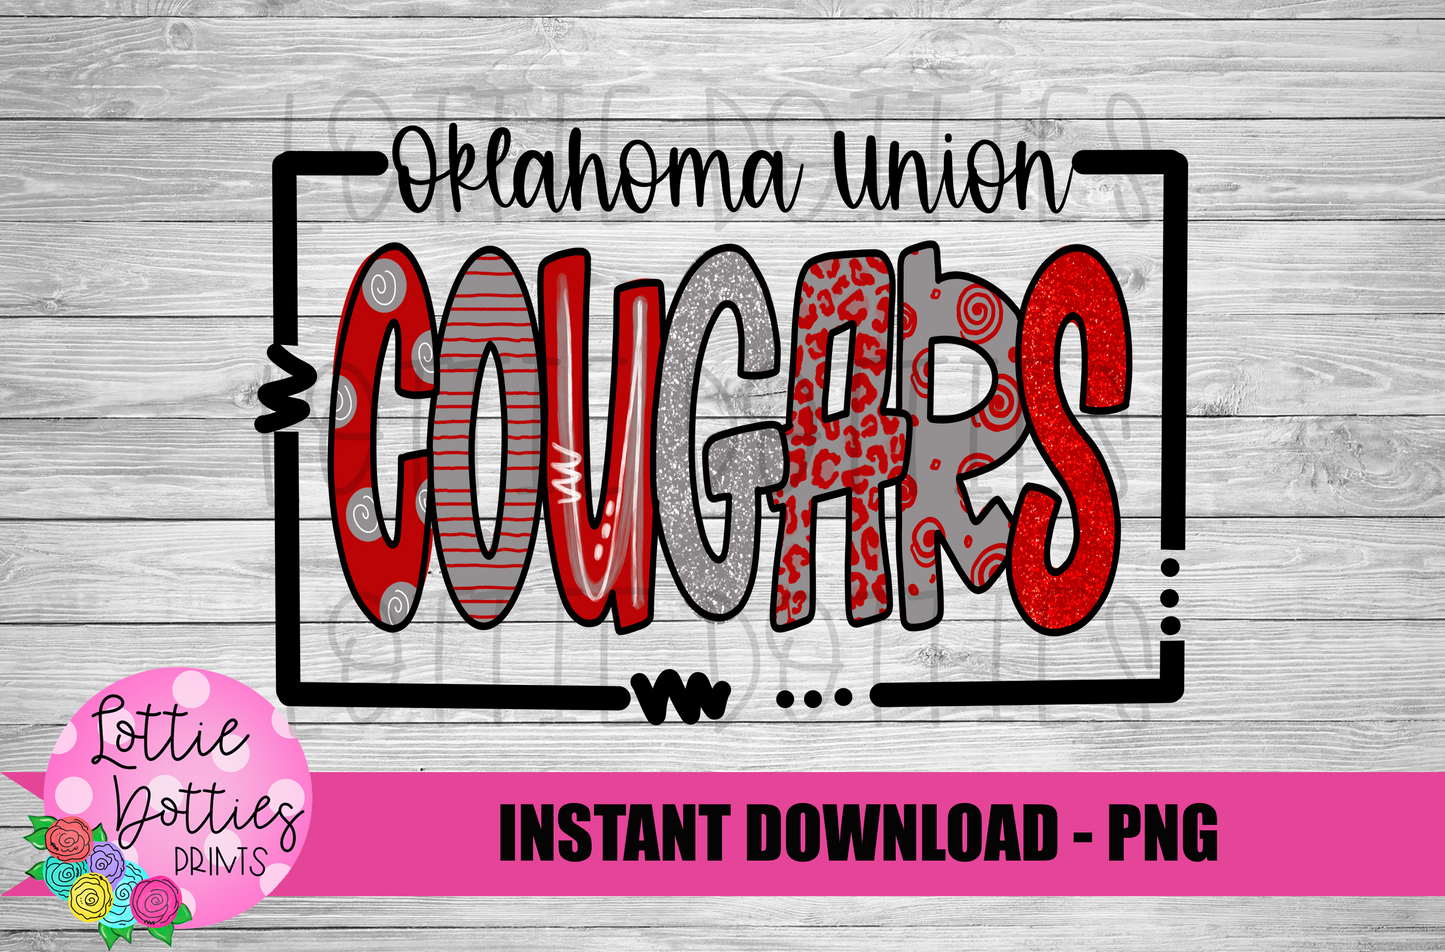 Oklahoma Union Cougars  Png - Sublimation Design - Cougars  Sublimation- Digital Download